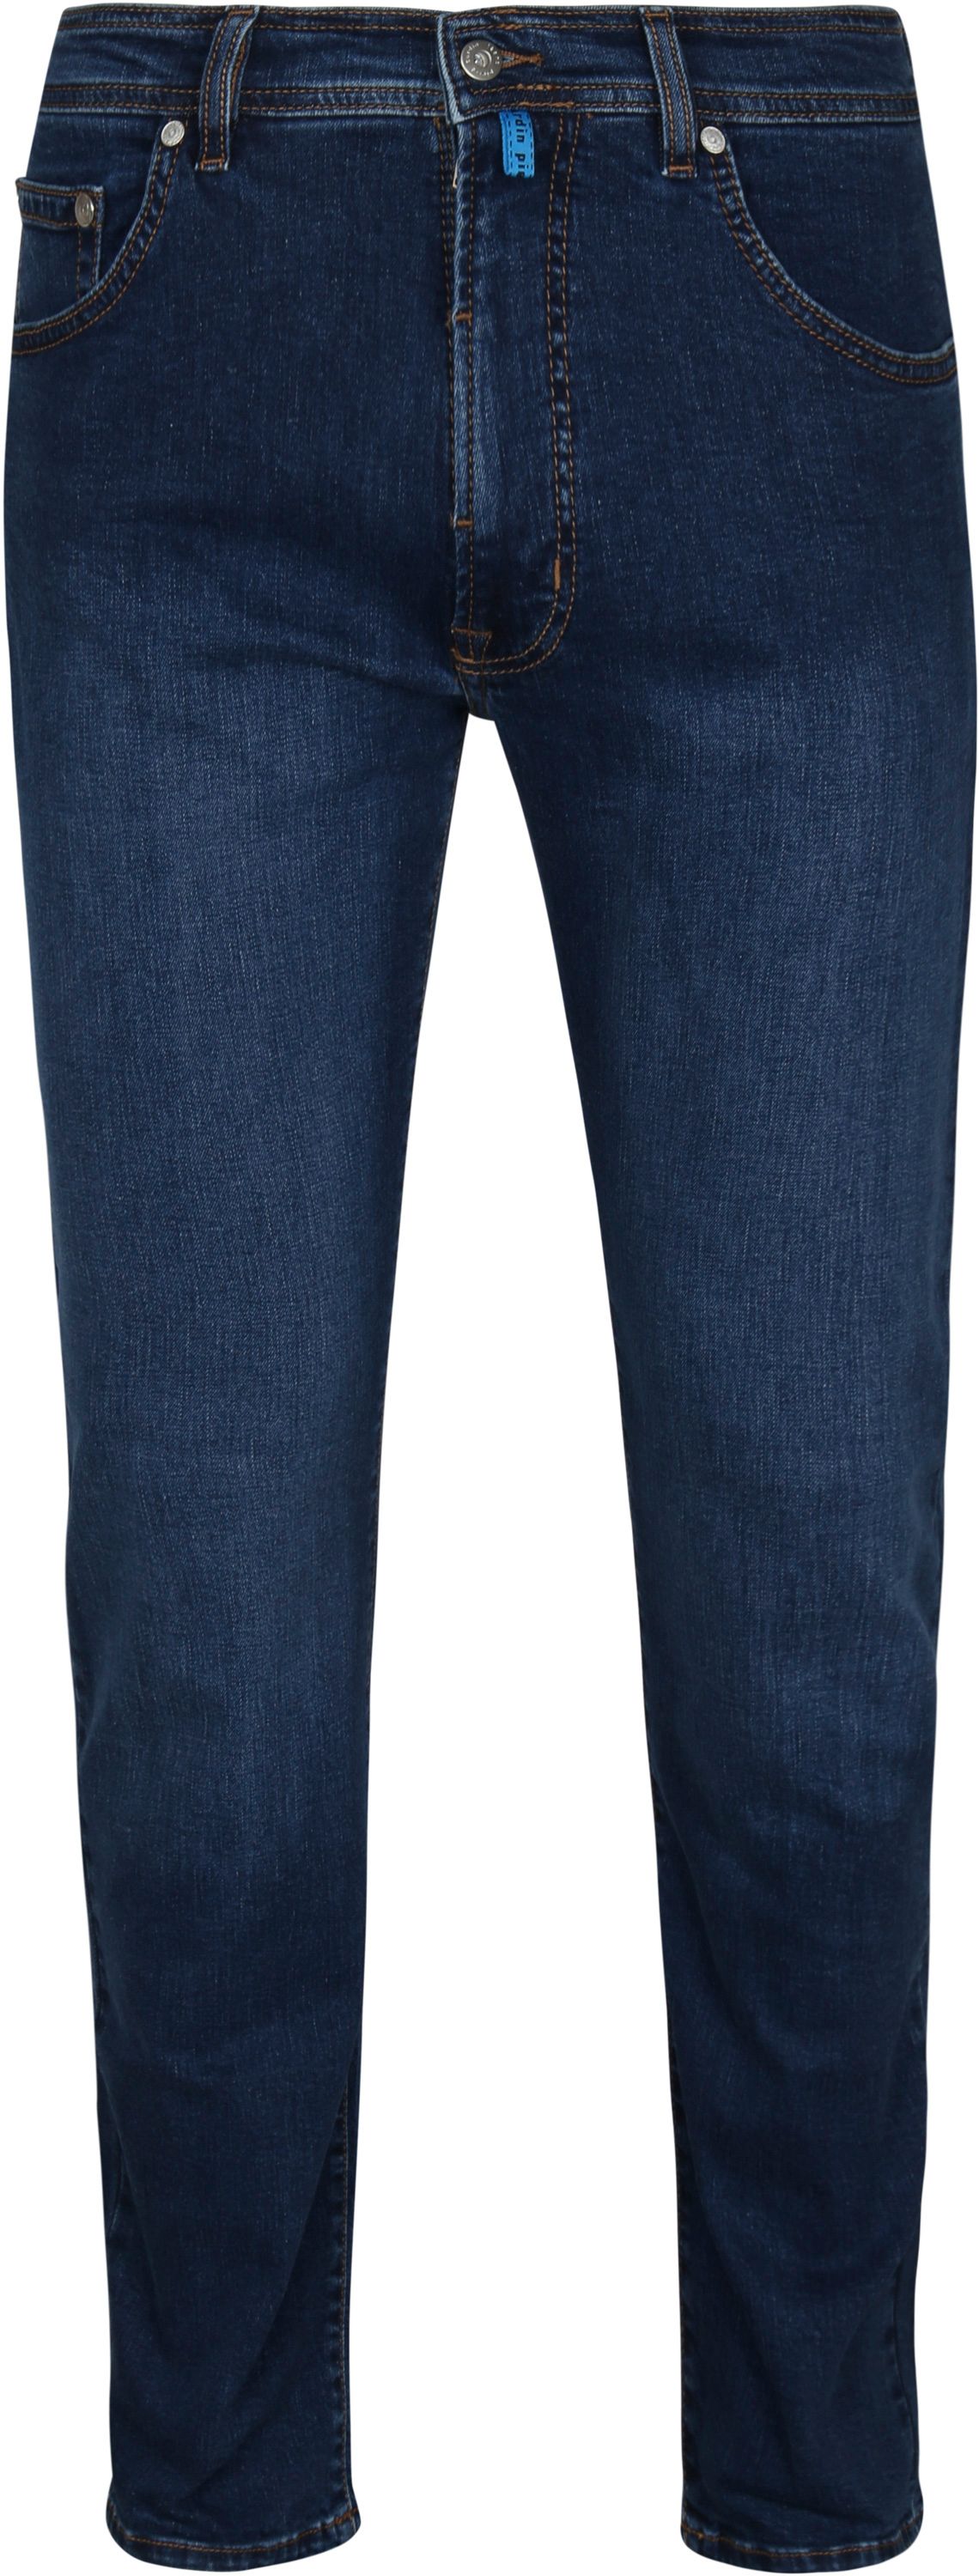 Pierre Cardin 5 Pocket Denim Jeans Dark Dark Blue Blue size W 32